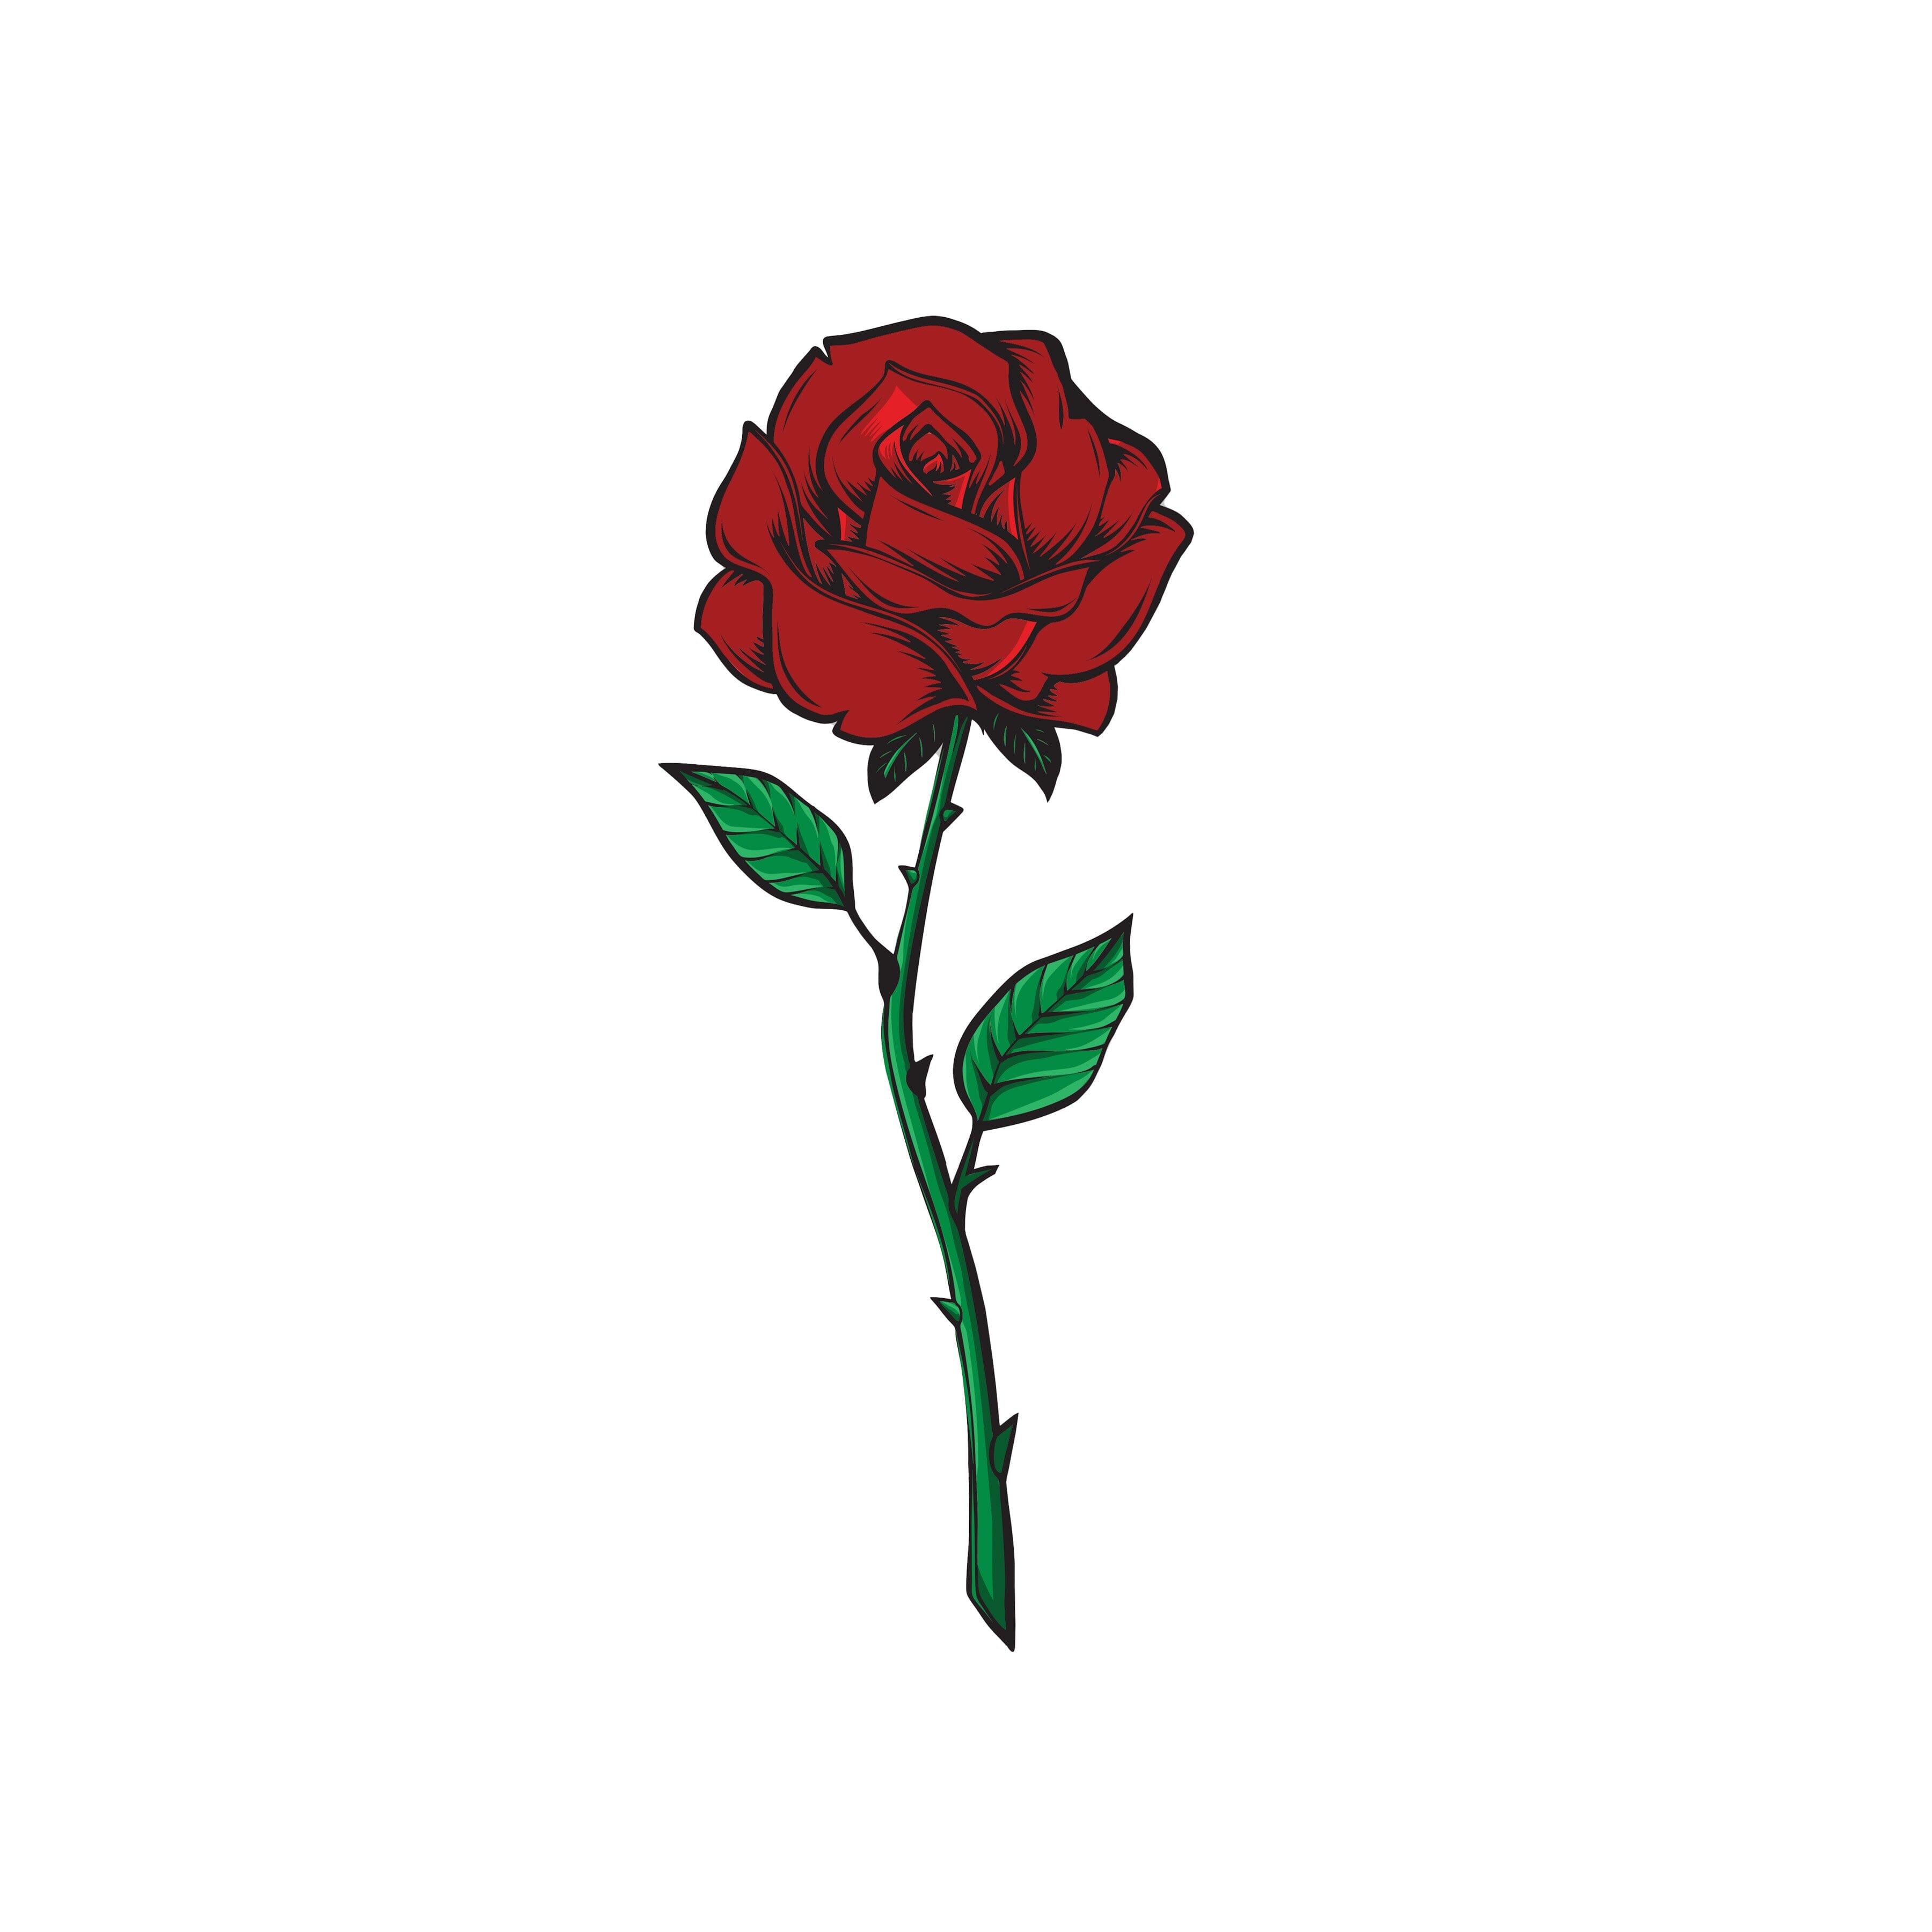 Long Stem Rose SVG cut file at